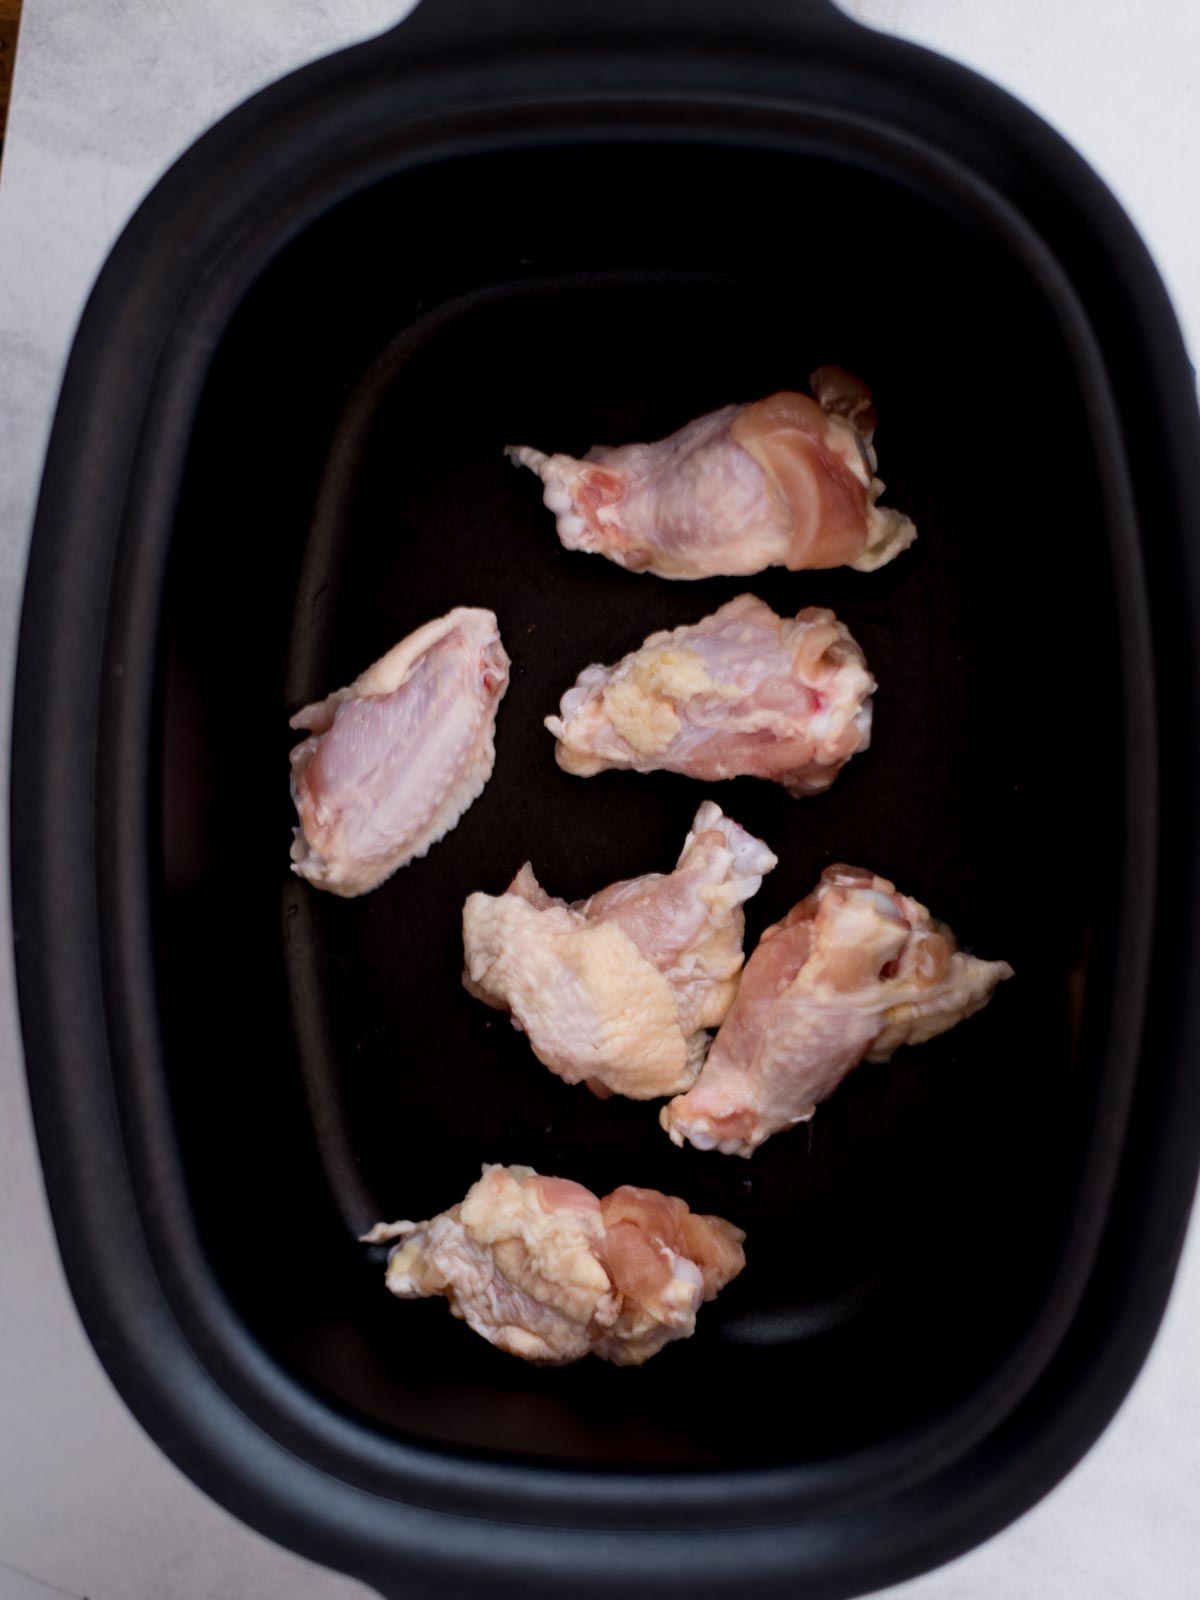 Raw chicken wings laying inside a crockpot.